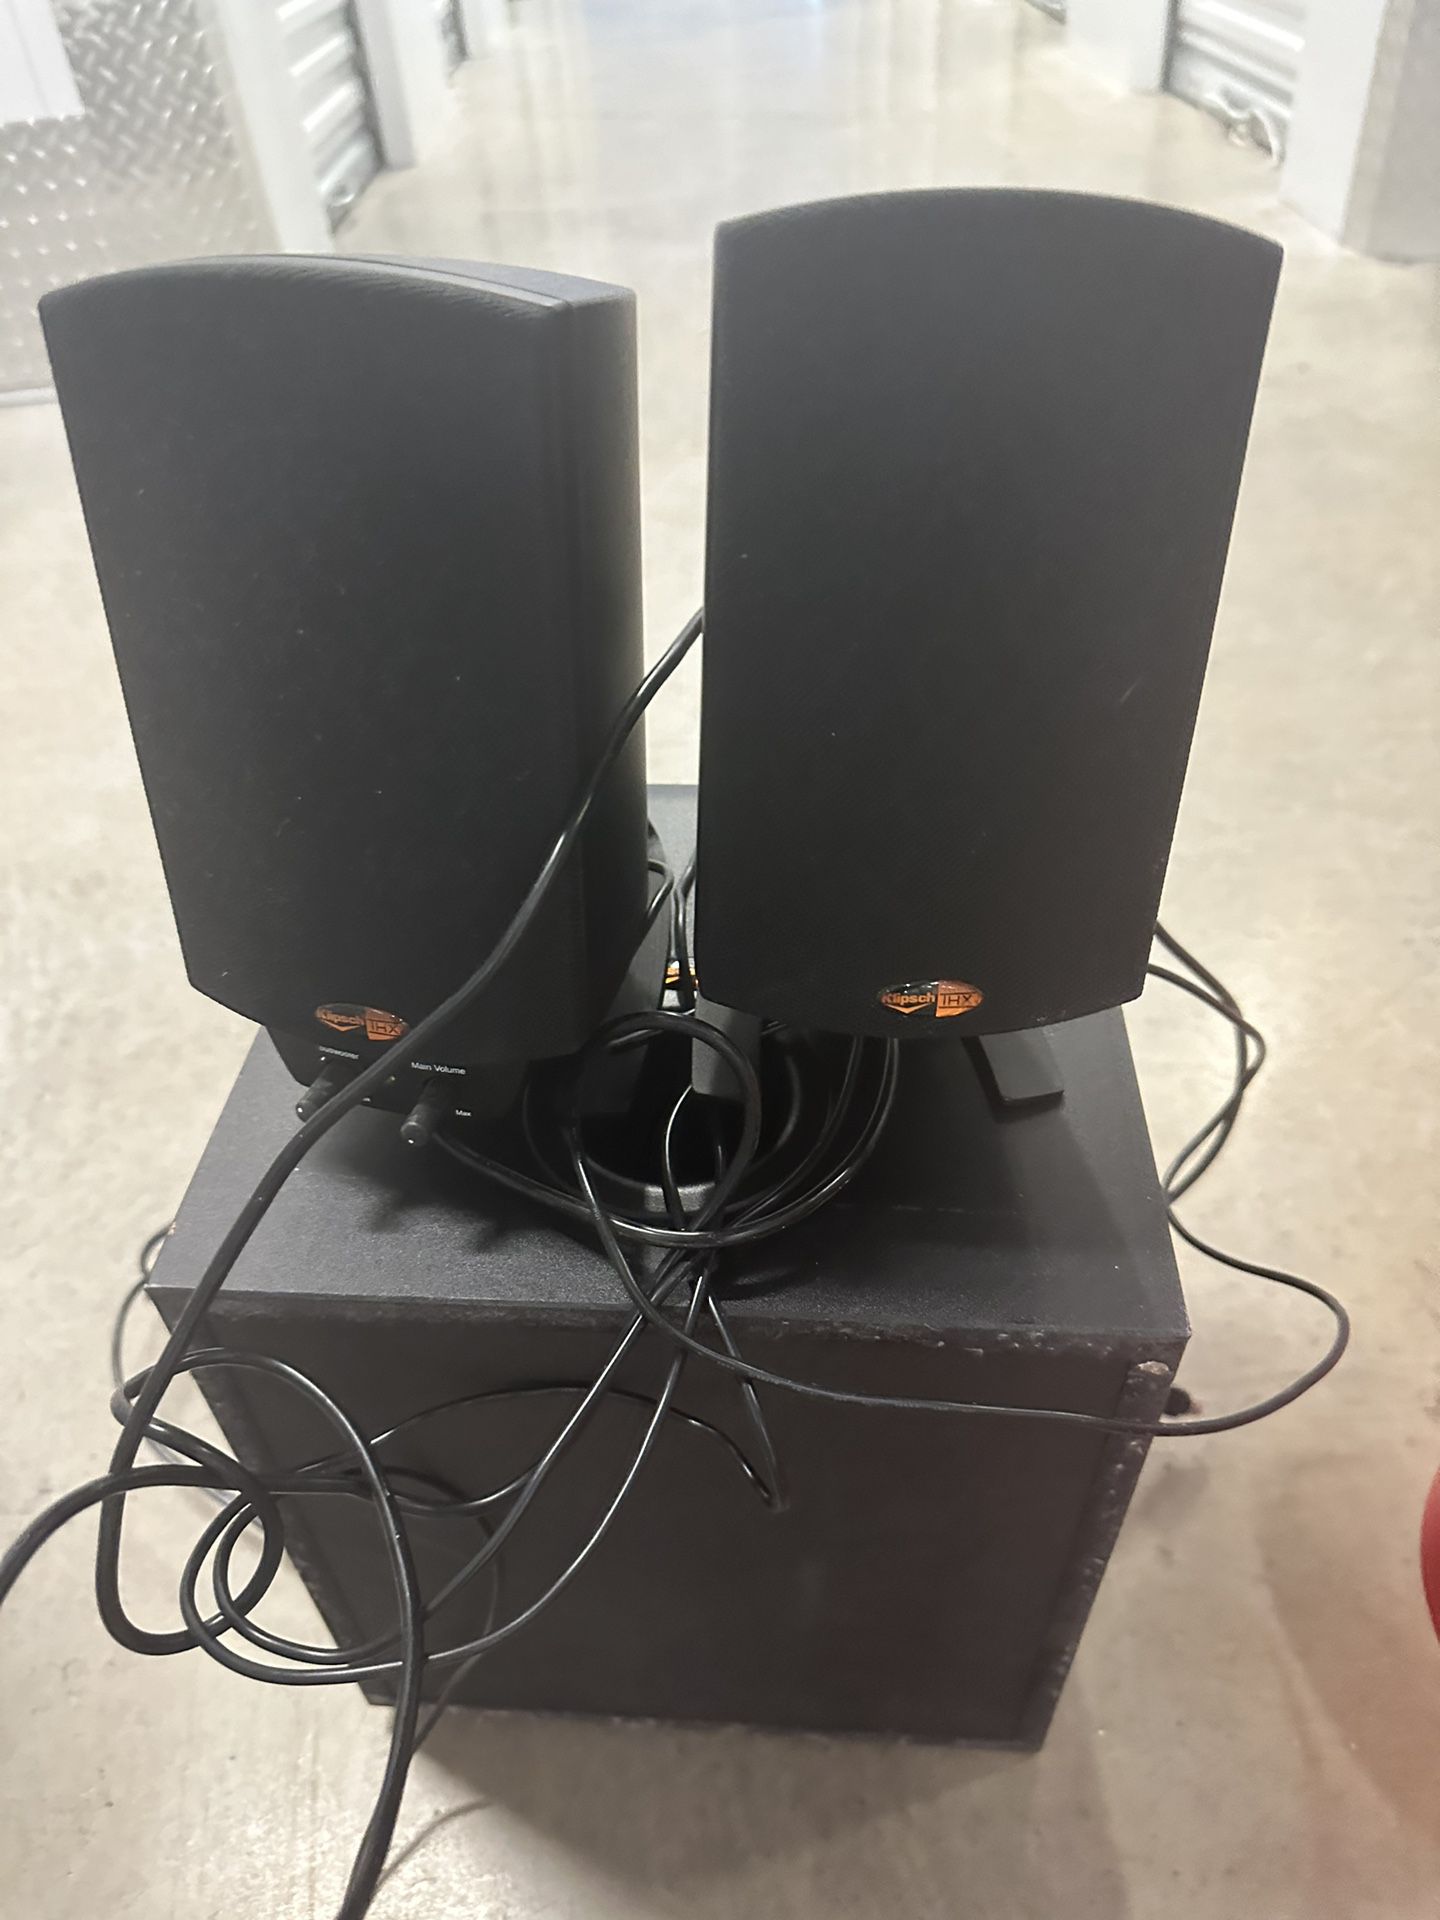 Klipsch Pro Media 2.1 Speaker System 